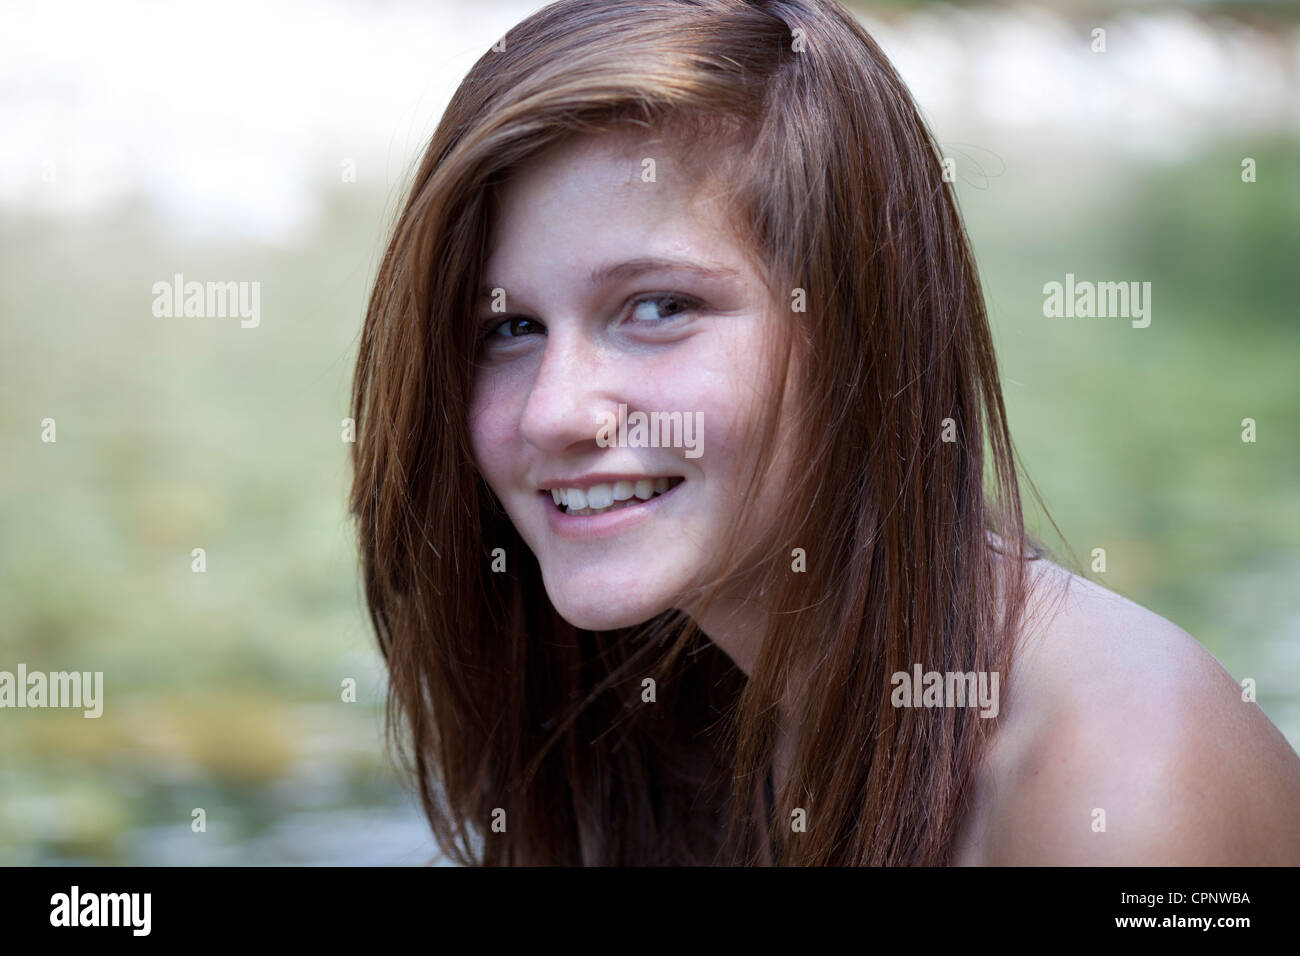 PORTRAIT OF ADOLESCENT GIRL Stock Photo